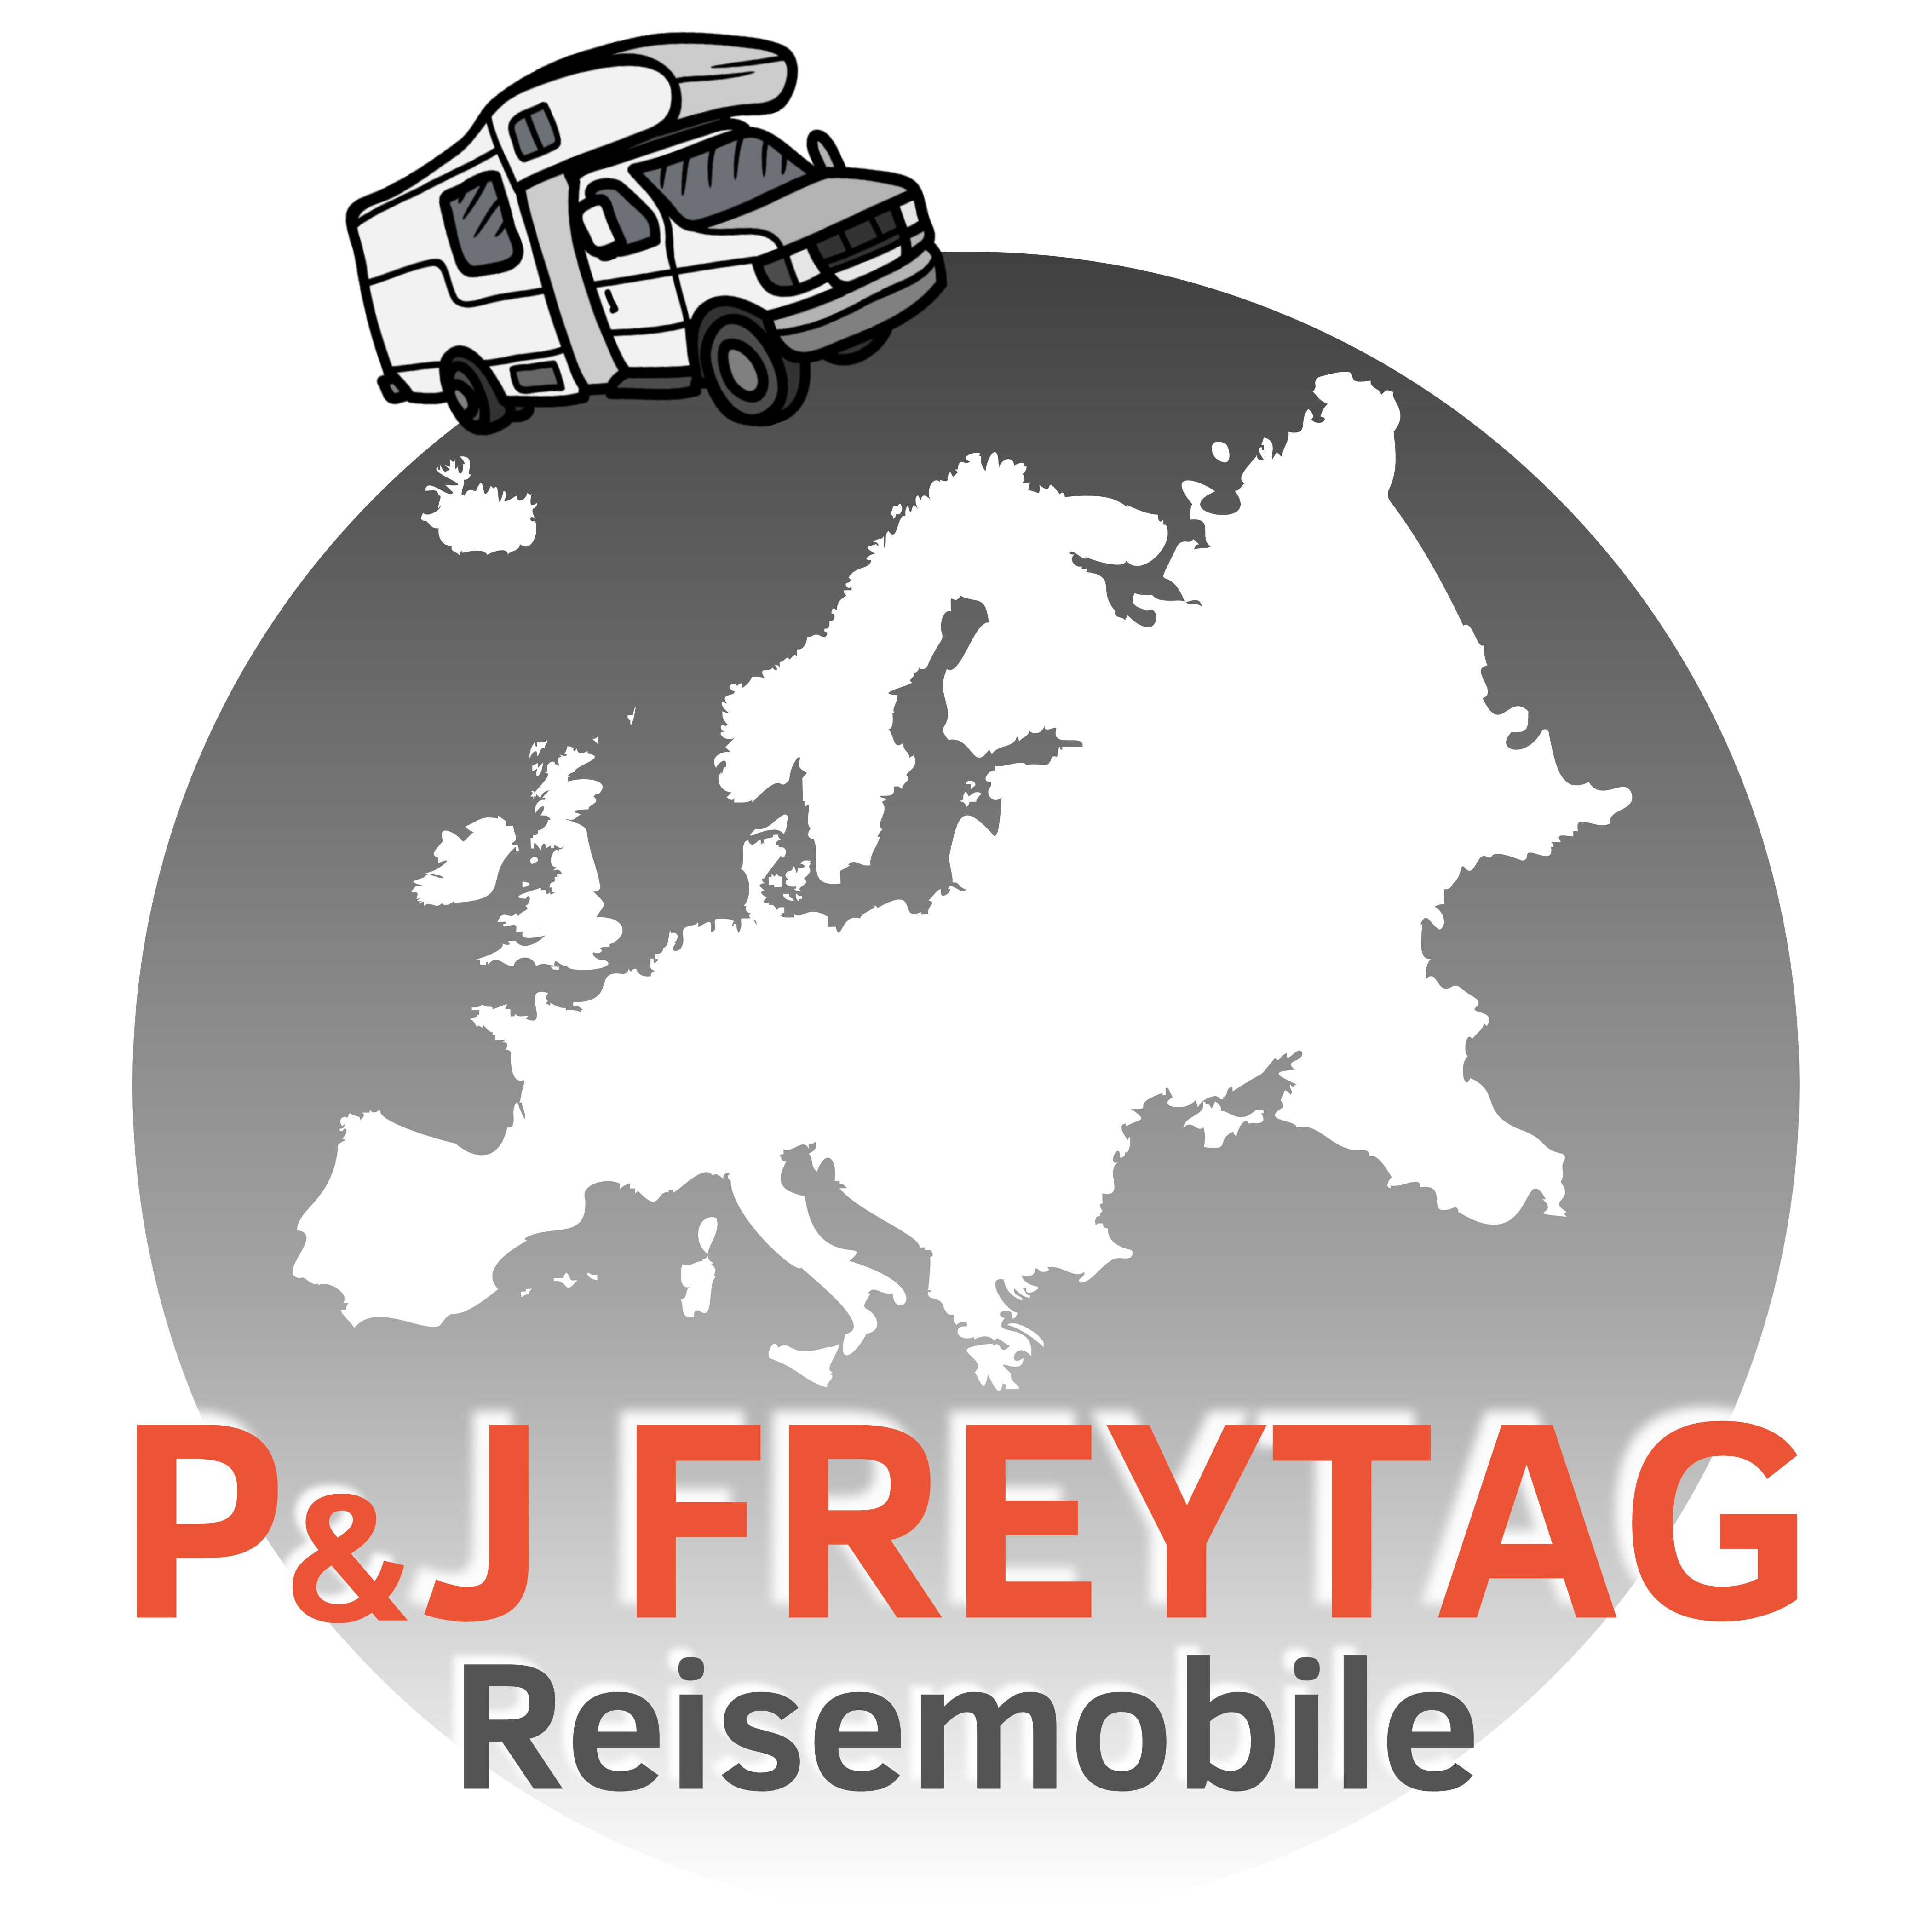 Reisemobile Freytag in Magdeburg - Logo